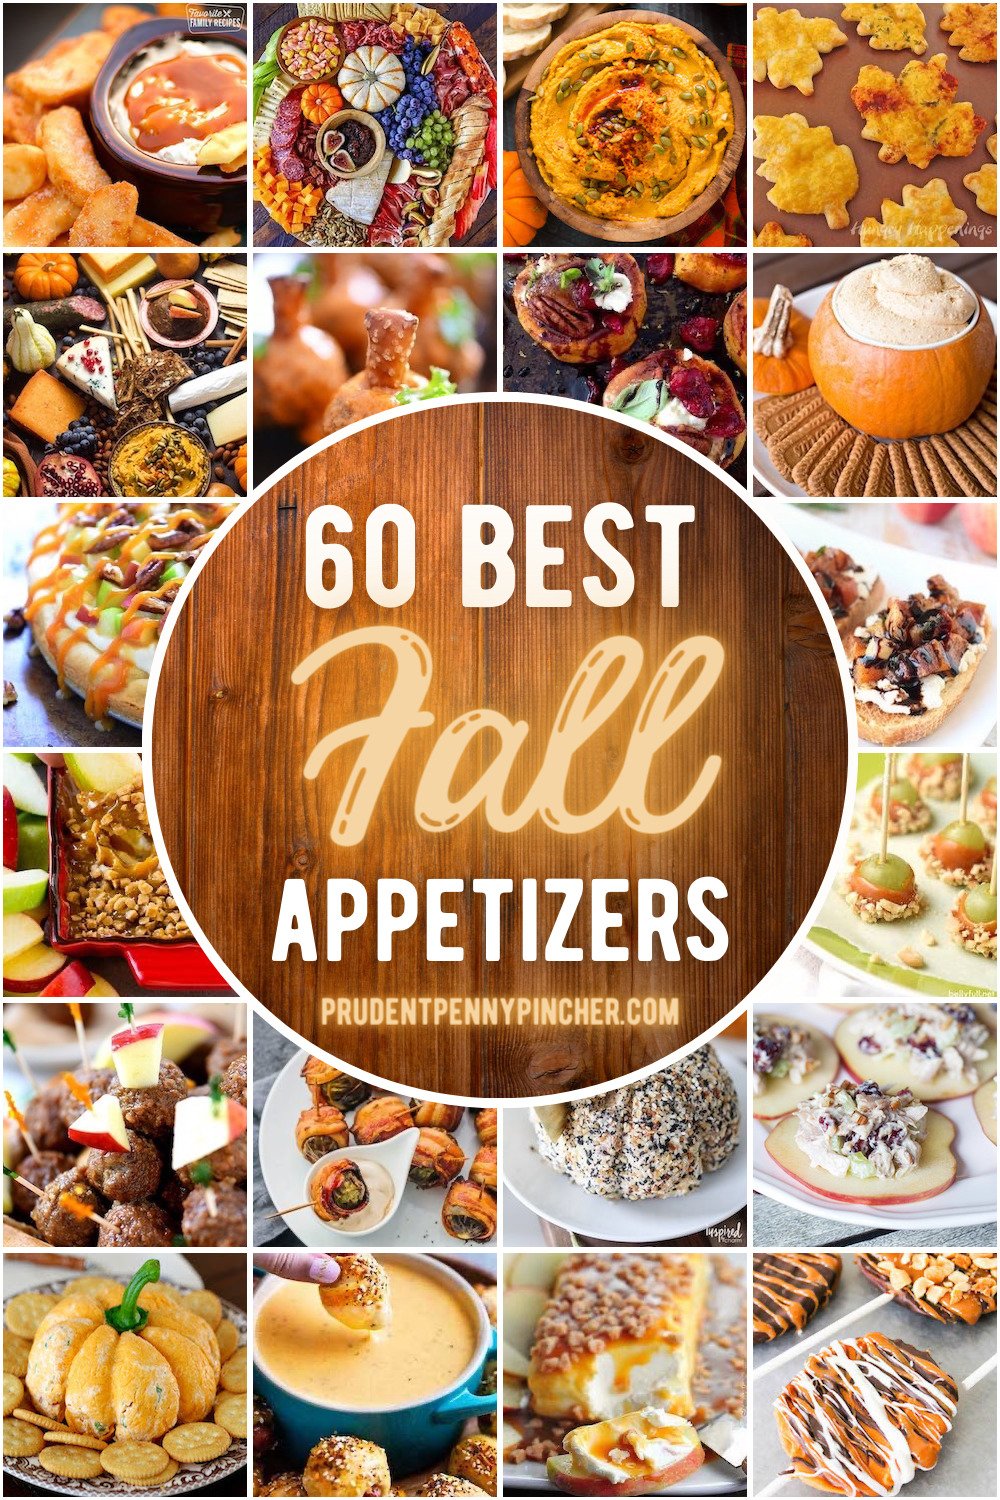 https://www.prudentpennypincher.com/wp-content/uploads/2020/08/fall-appetizers.jpg